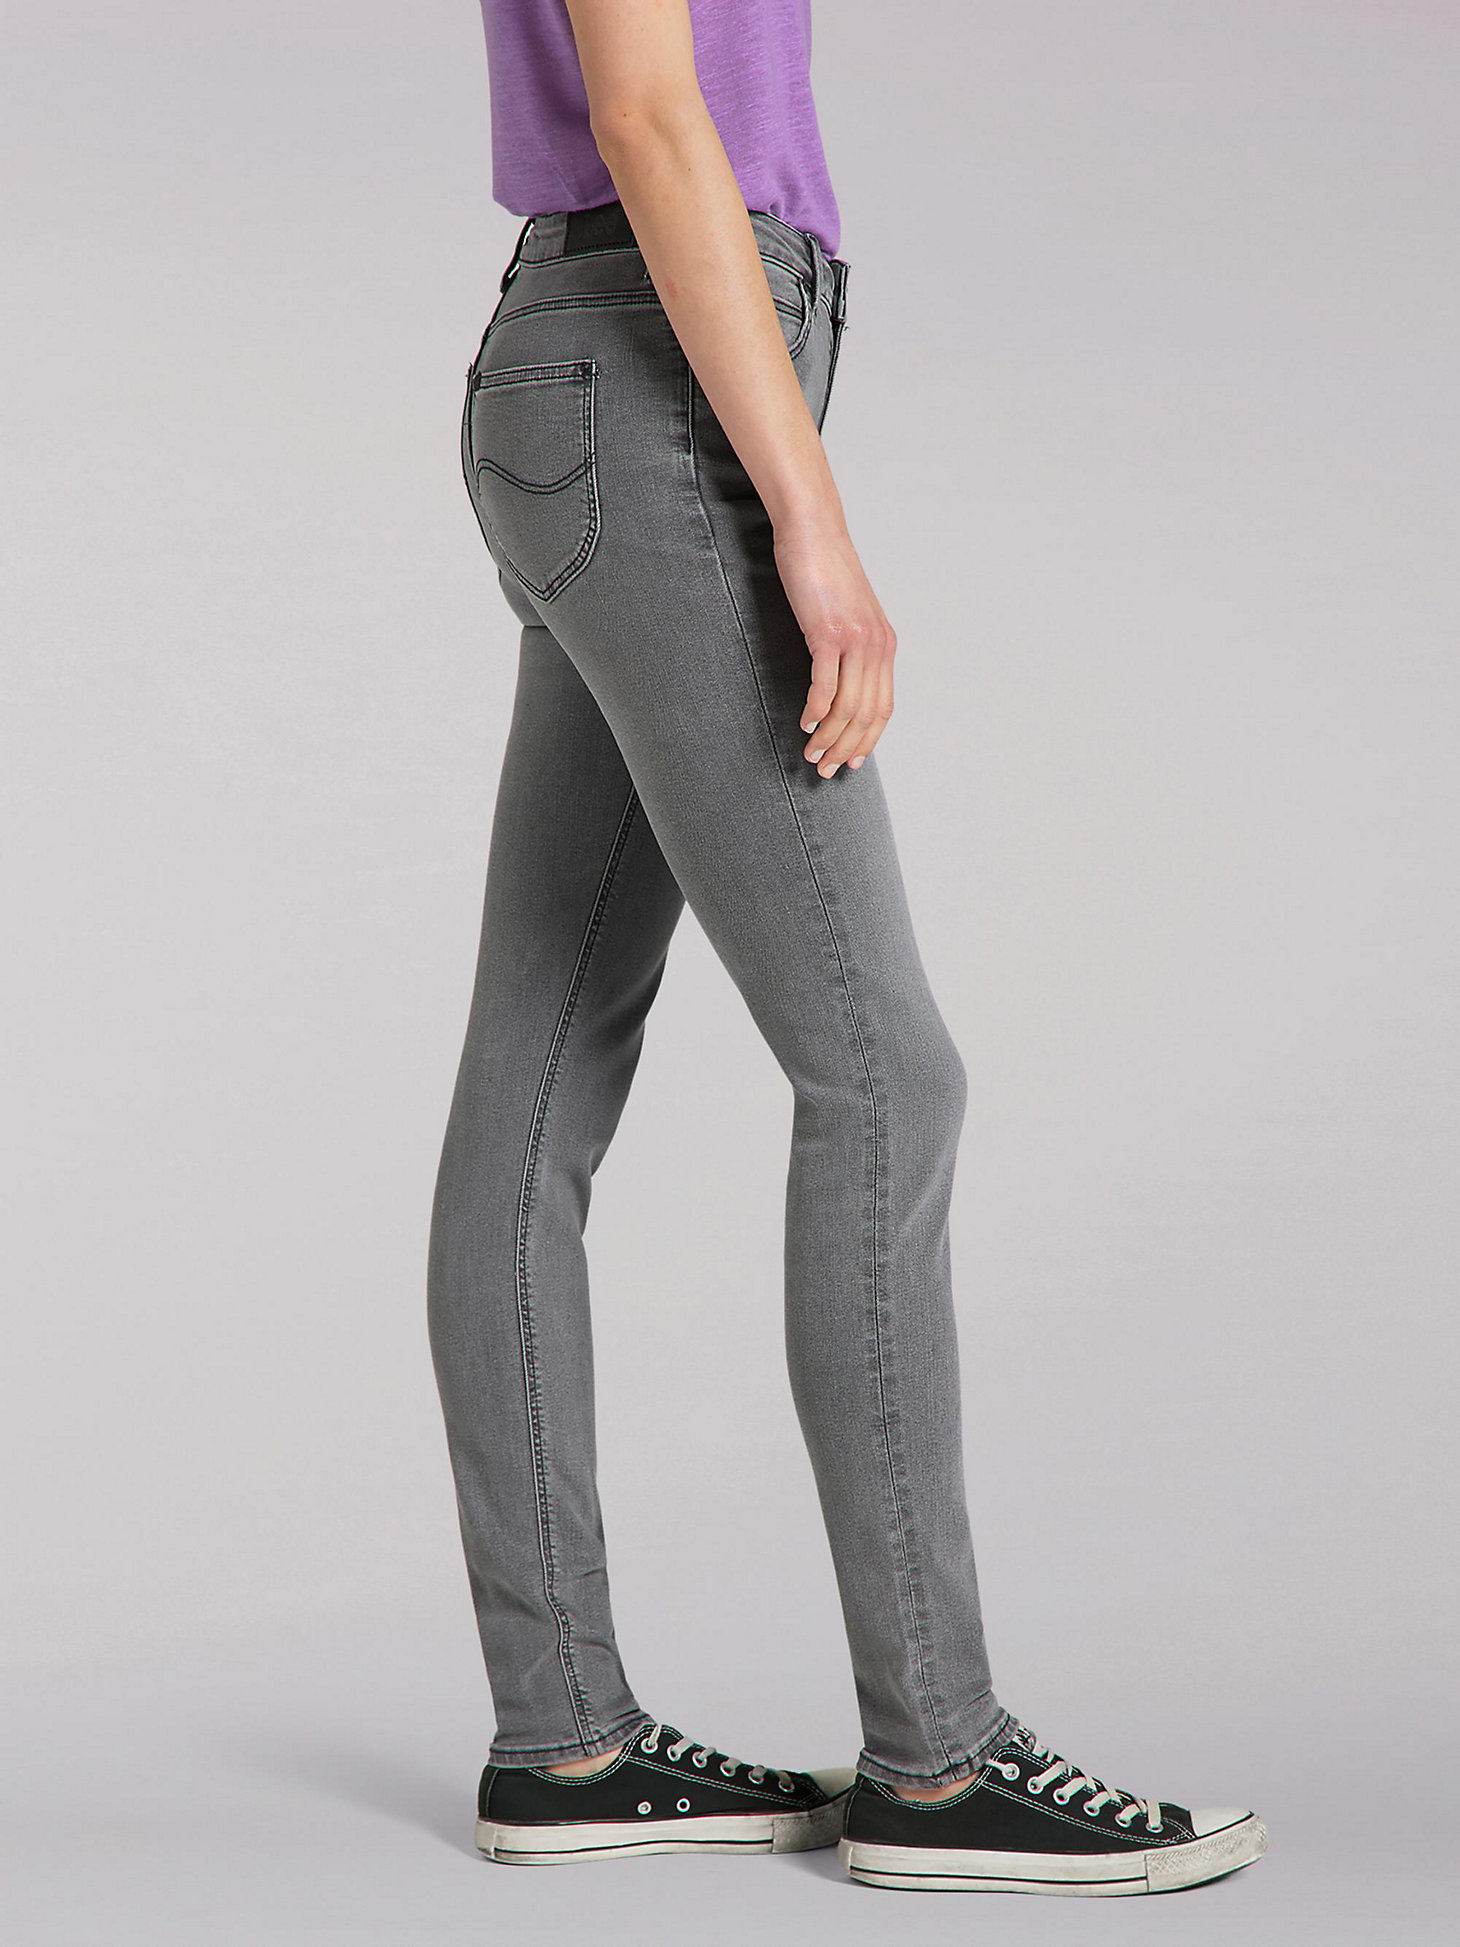 Women's Lee European Collection Scarlett High Rise Skinny Jean in Grey Holly alternative view 2